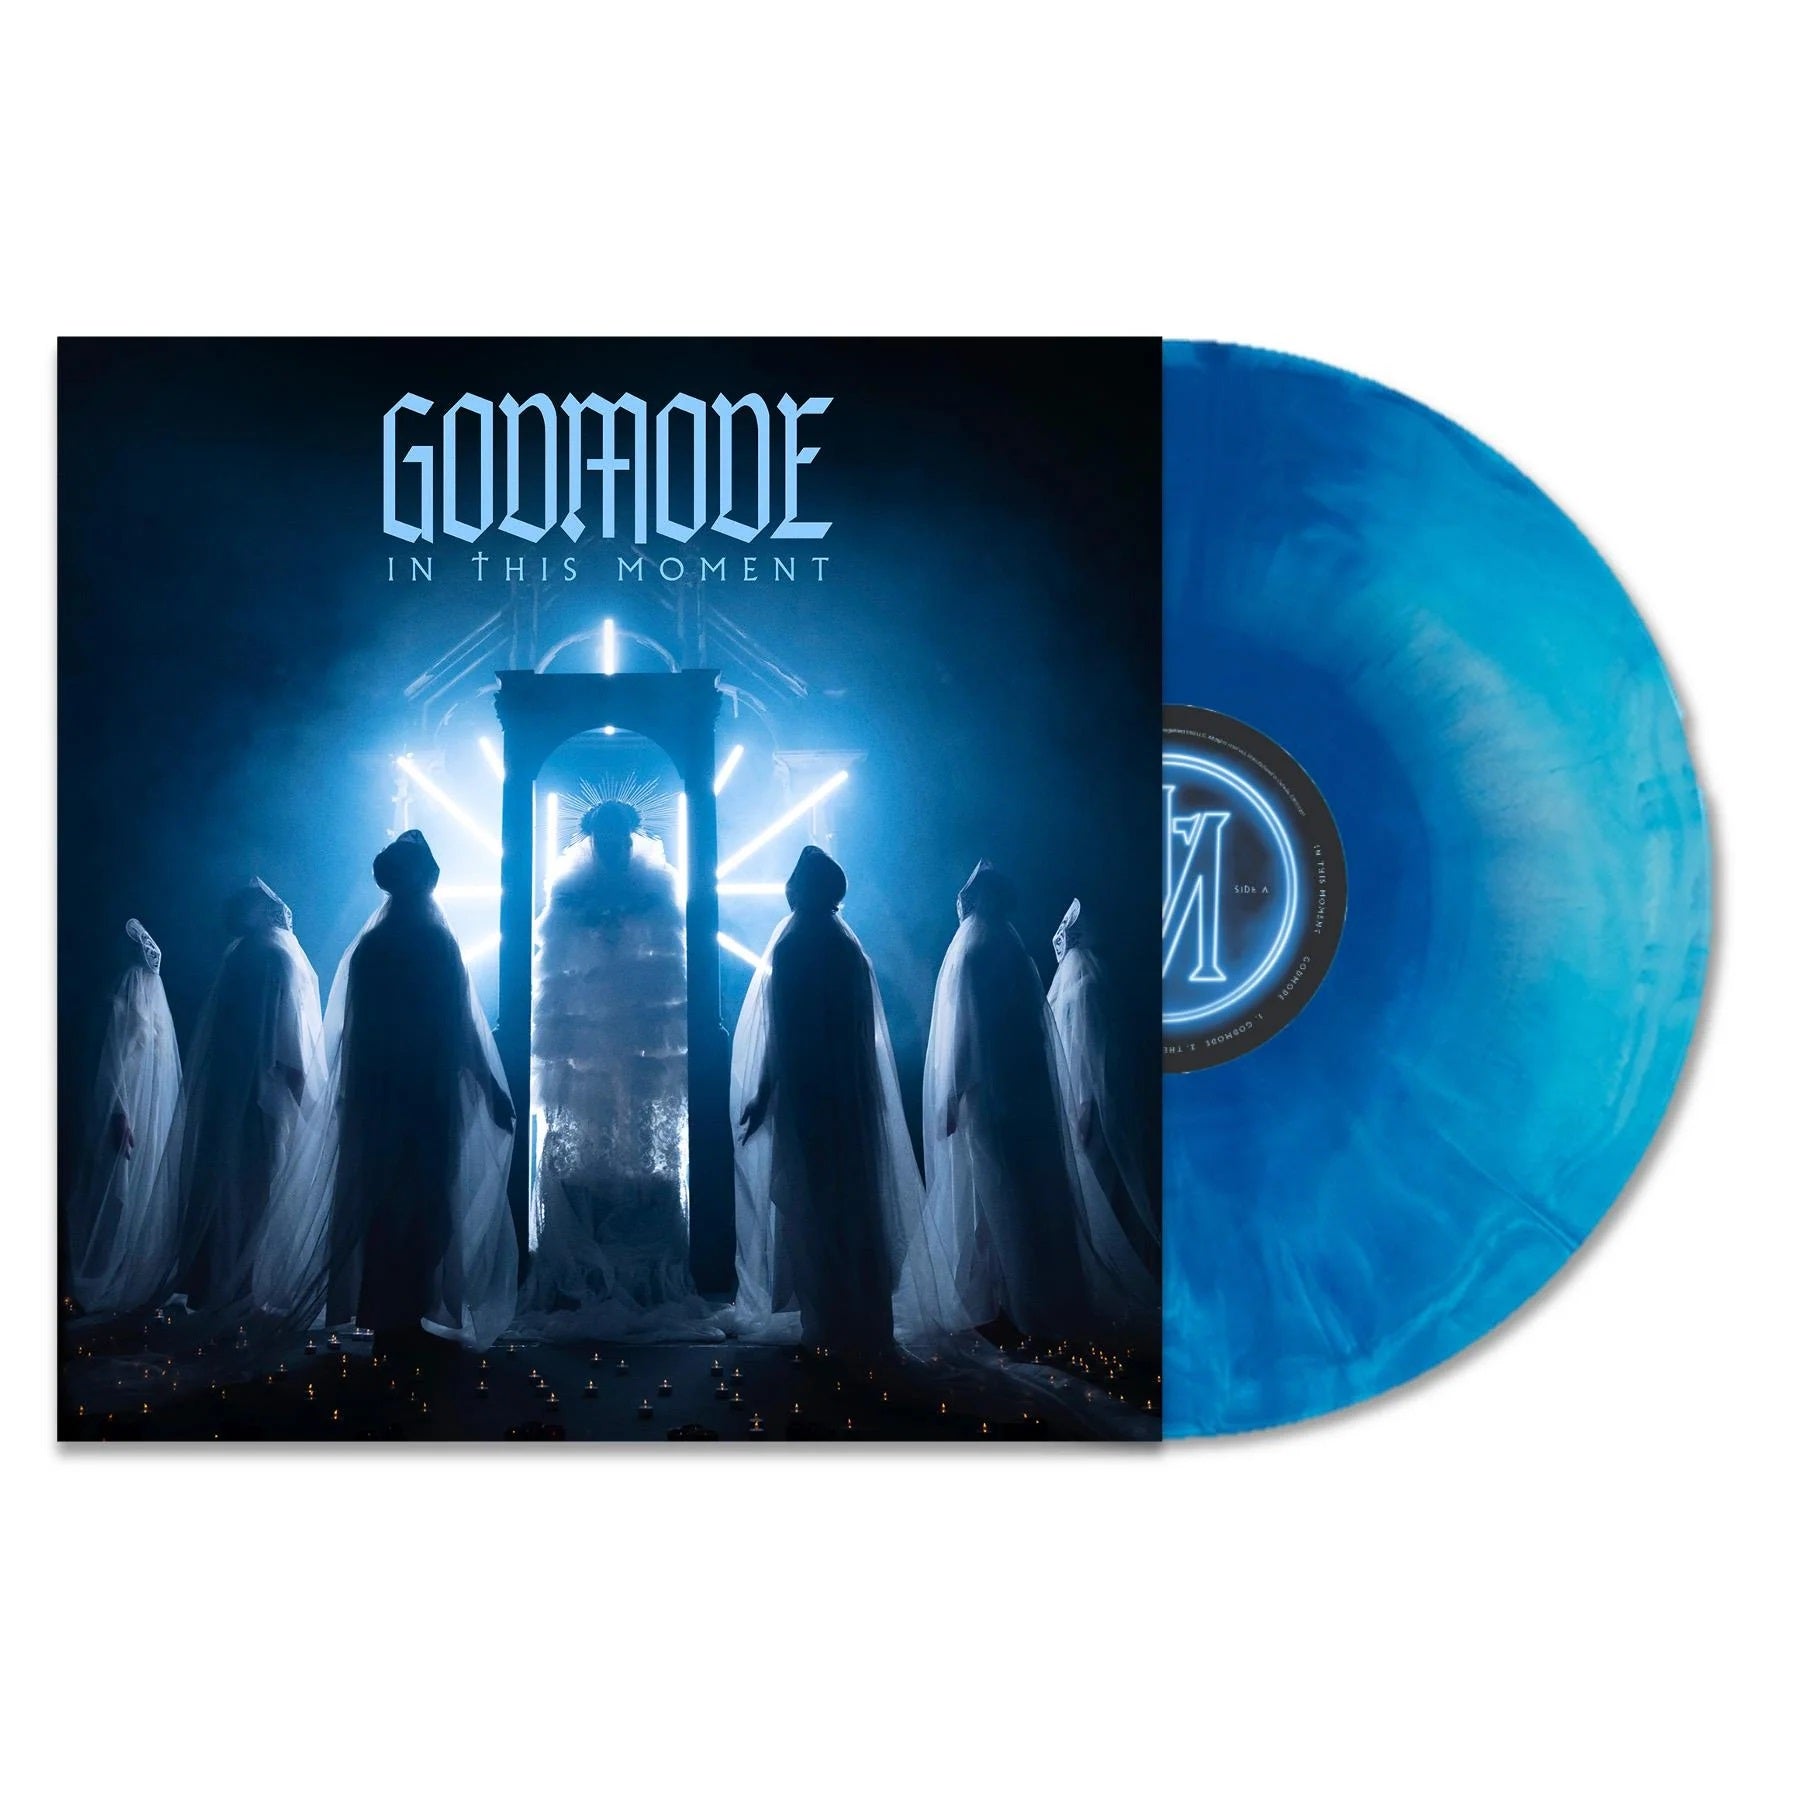 In This Moment - Godmode (Ltd. Ed. Blue Galaxy vinyl) - Vinyl - New - PRE-ORDER